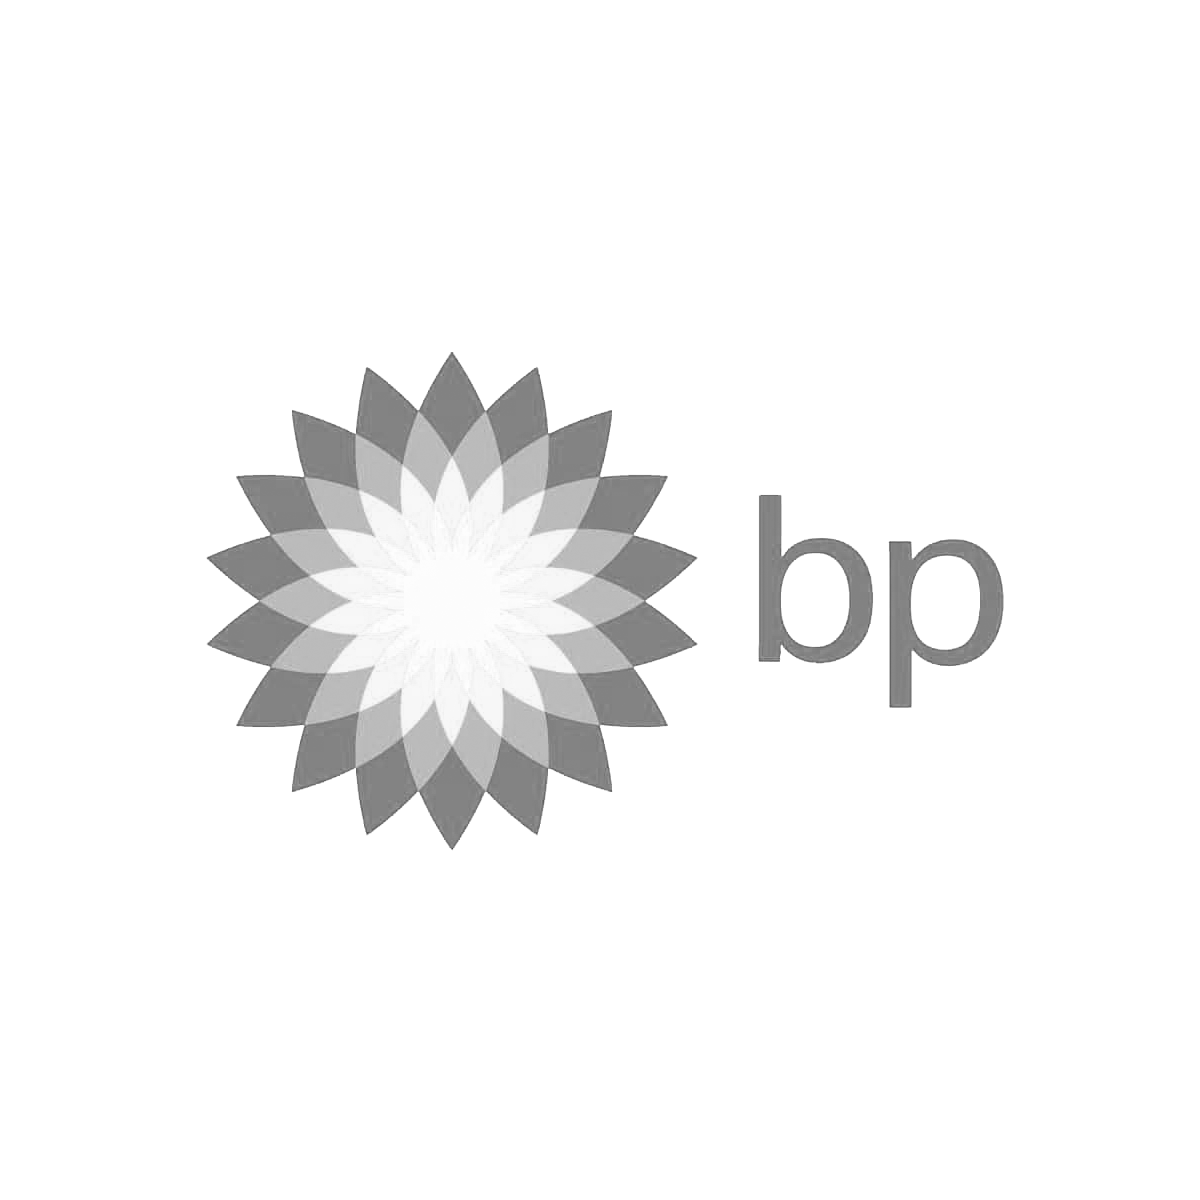 bp-logo-white-background-f5-e1499913620824.png